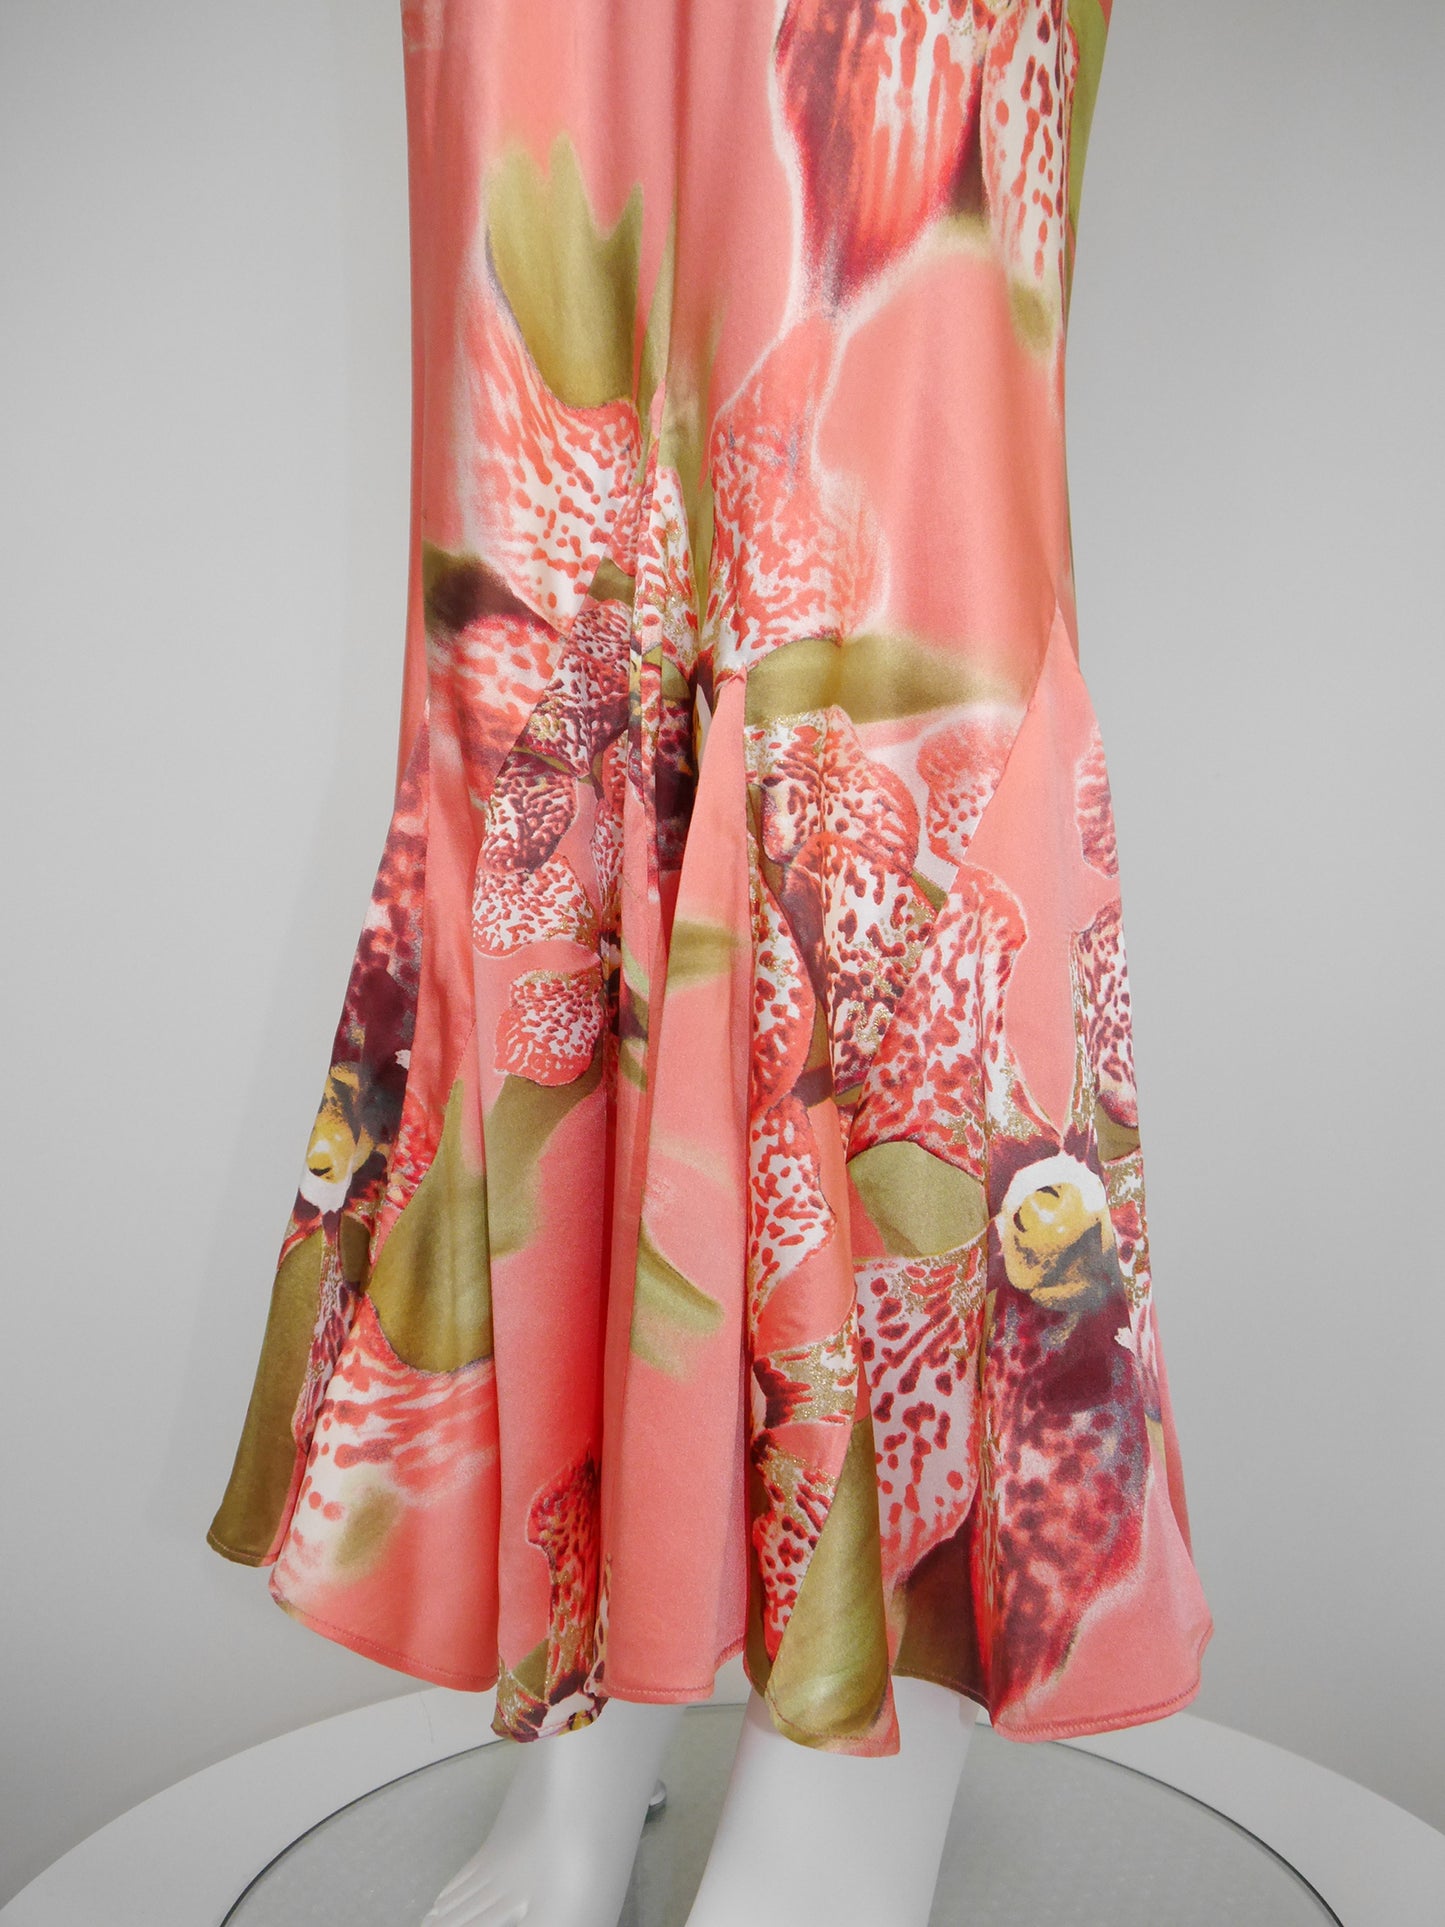 ROBERTO CAVALLI Spring 2005 Vintage Orchid Print Silk Maxi Gown